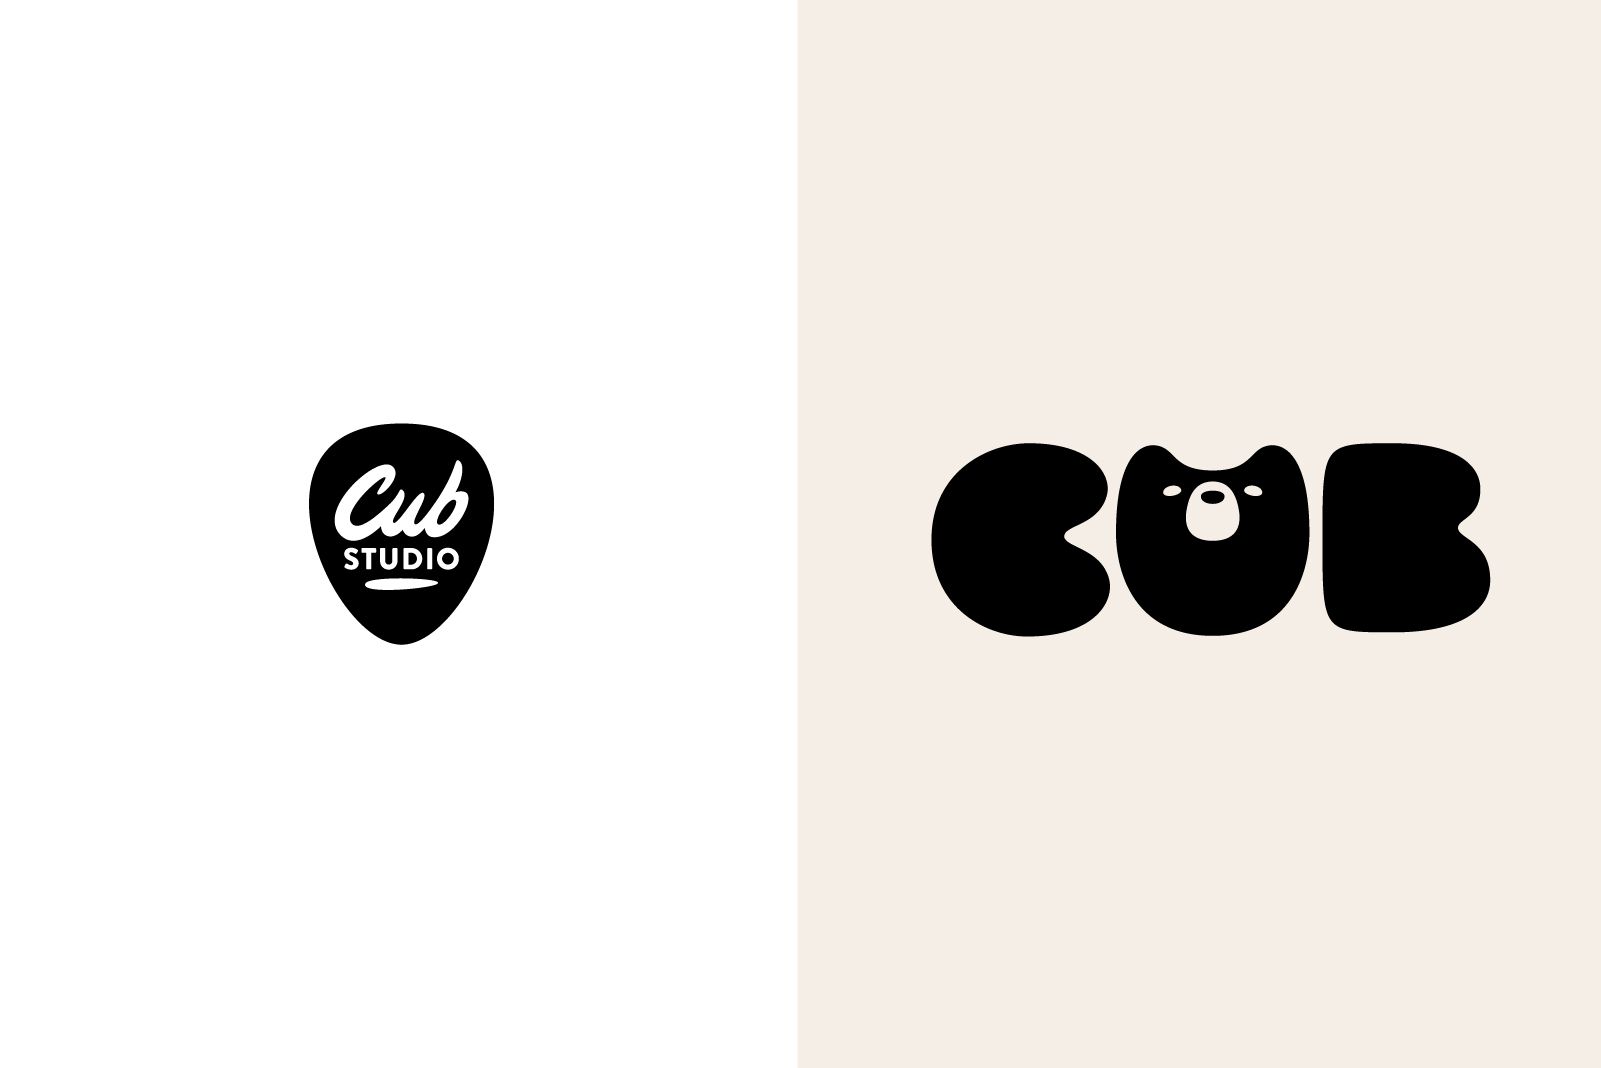 O Street Cub O Street Cub Refreshed Brand Identity - Old and New Logo Comparison 